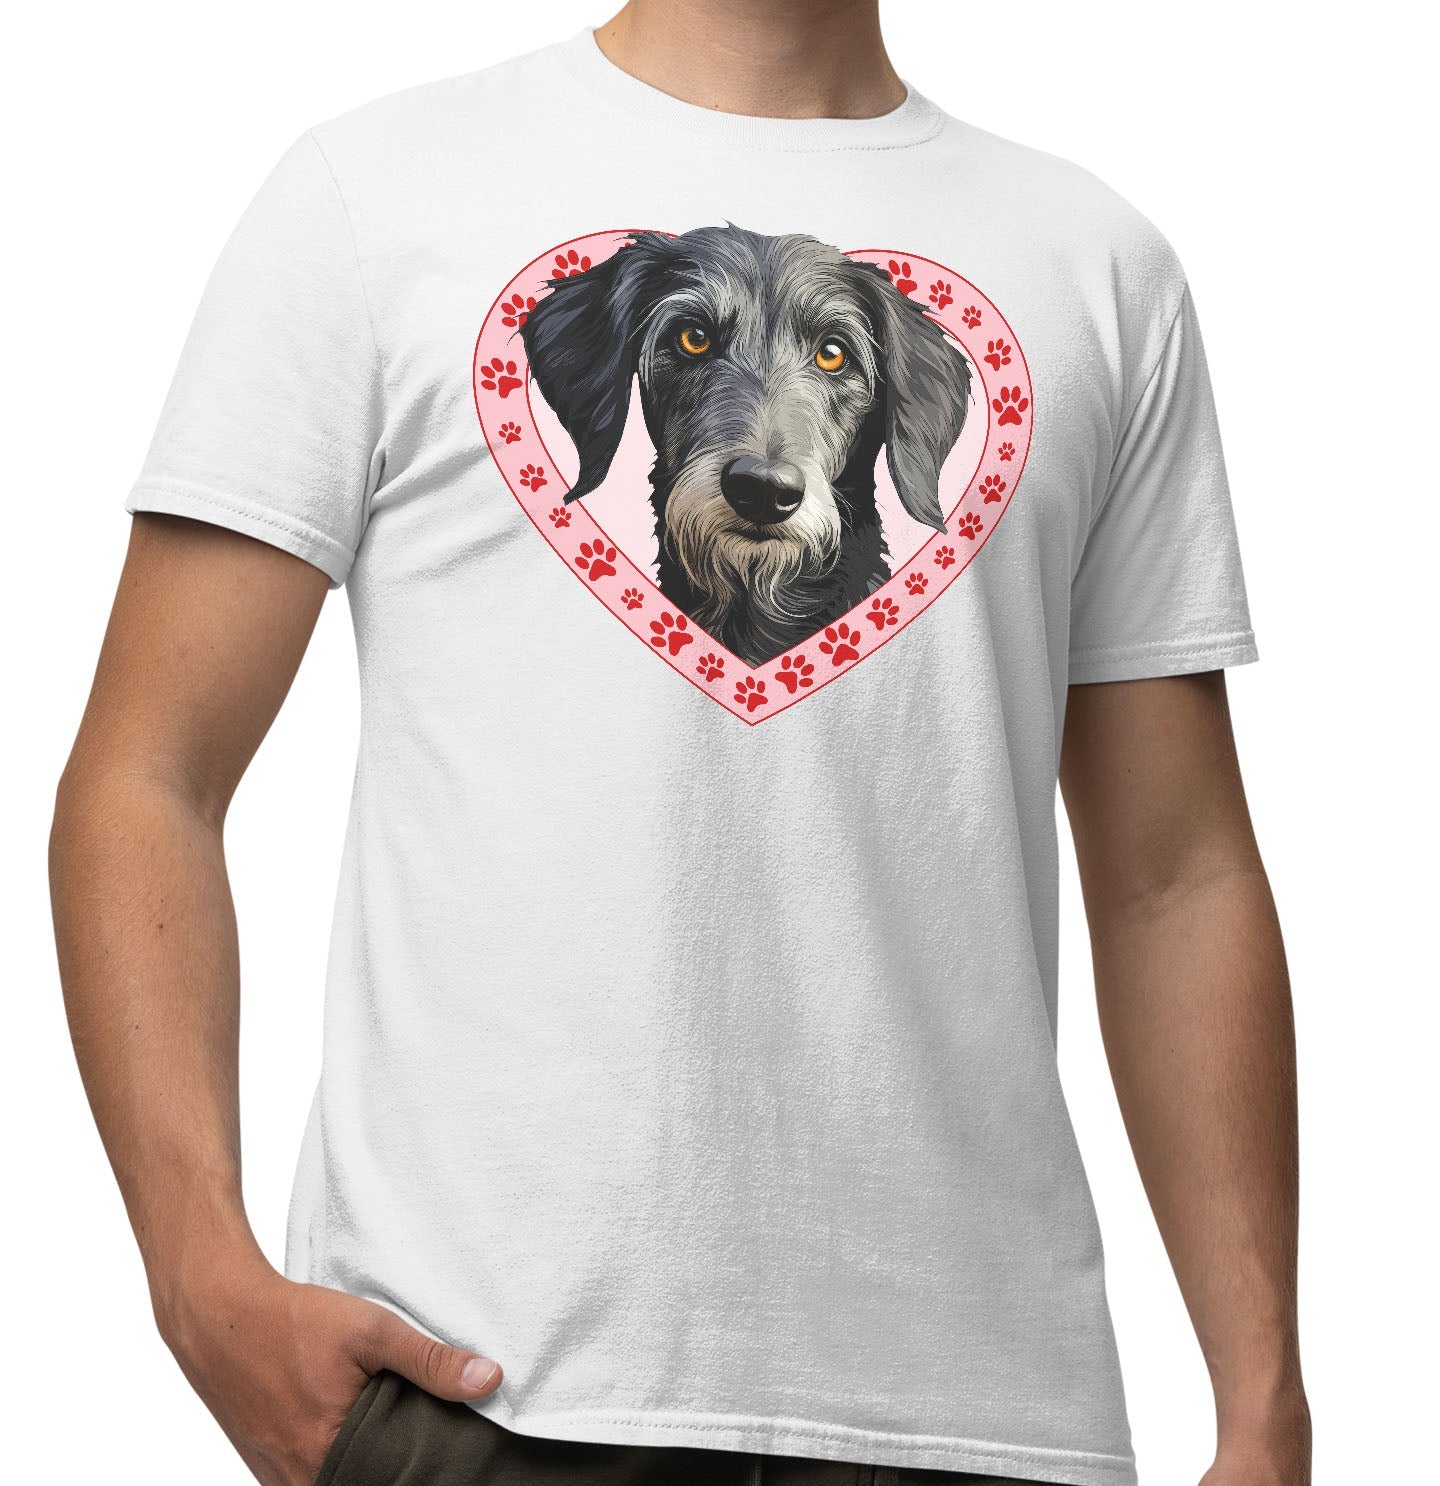 Scottish Deerhound Illustration In Heart - Adult Unisex T-Shirt